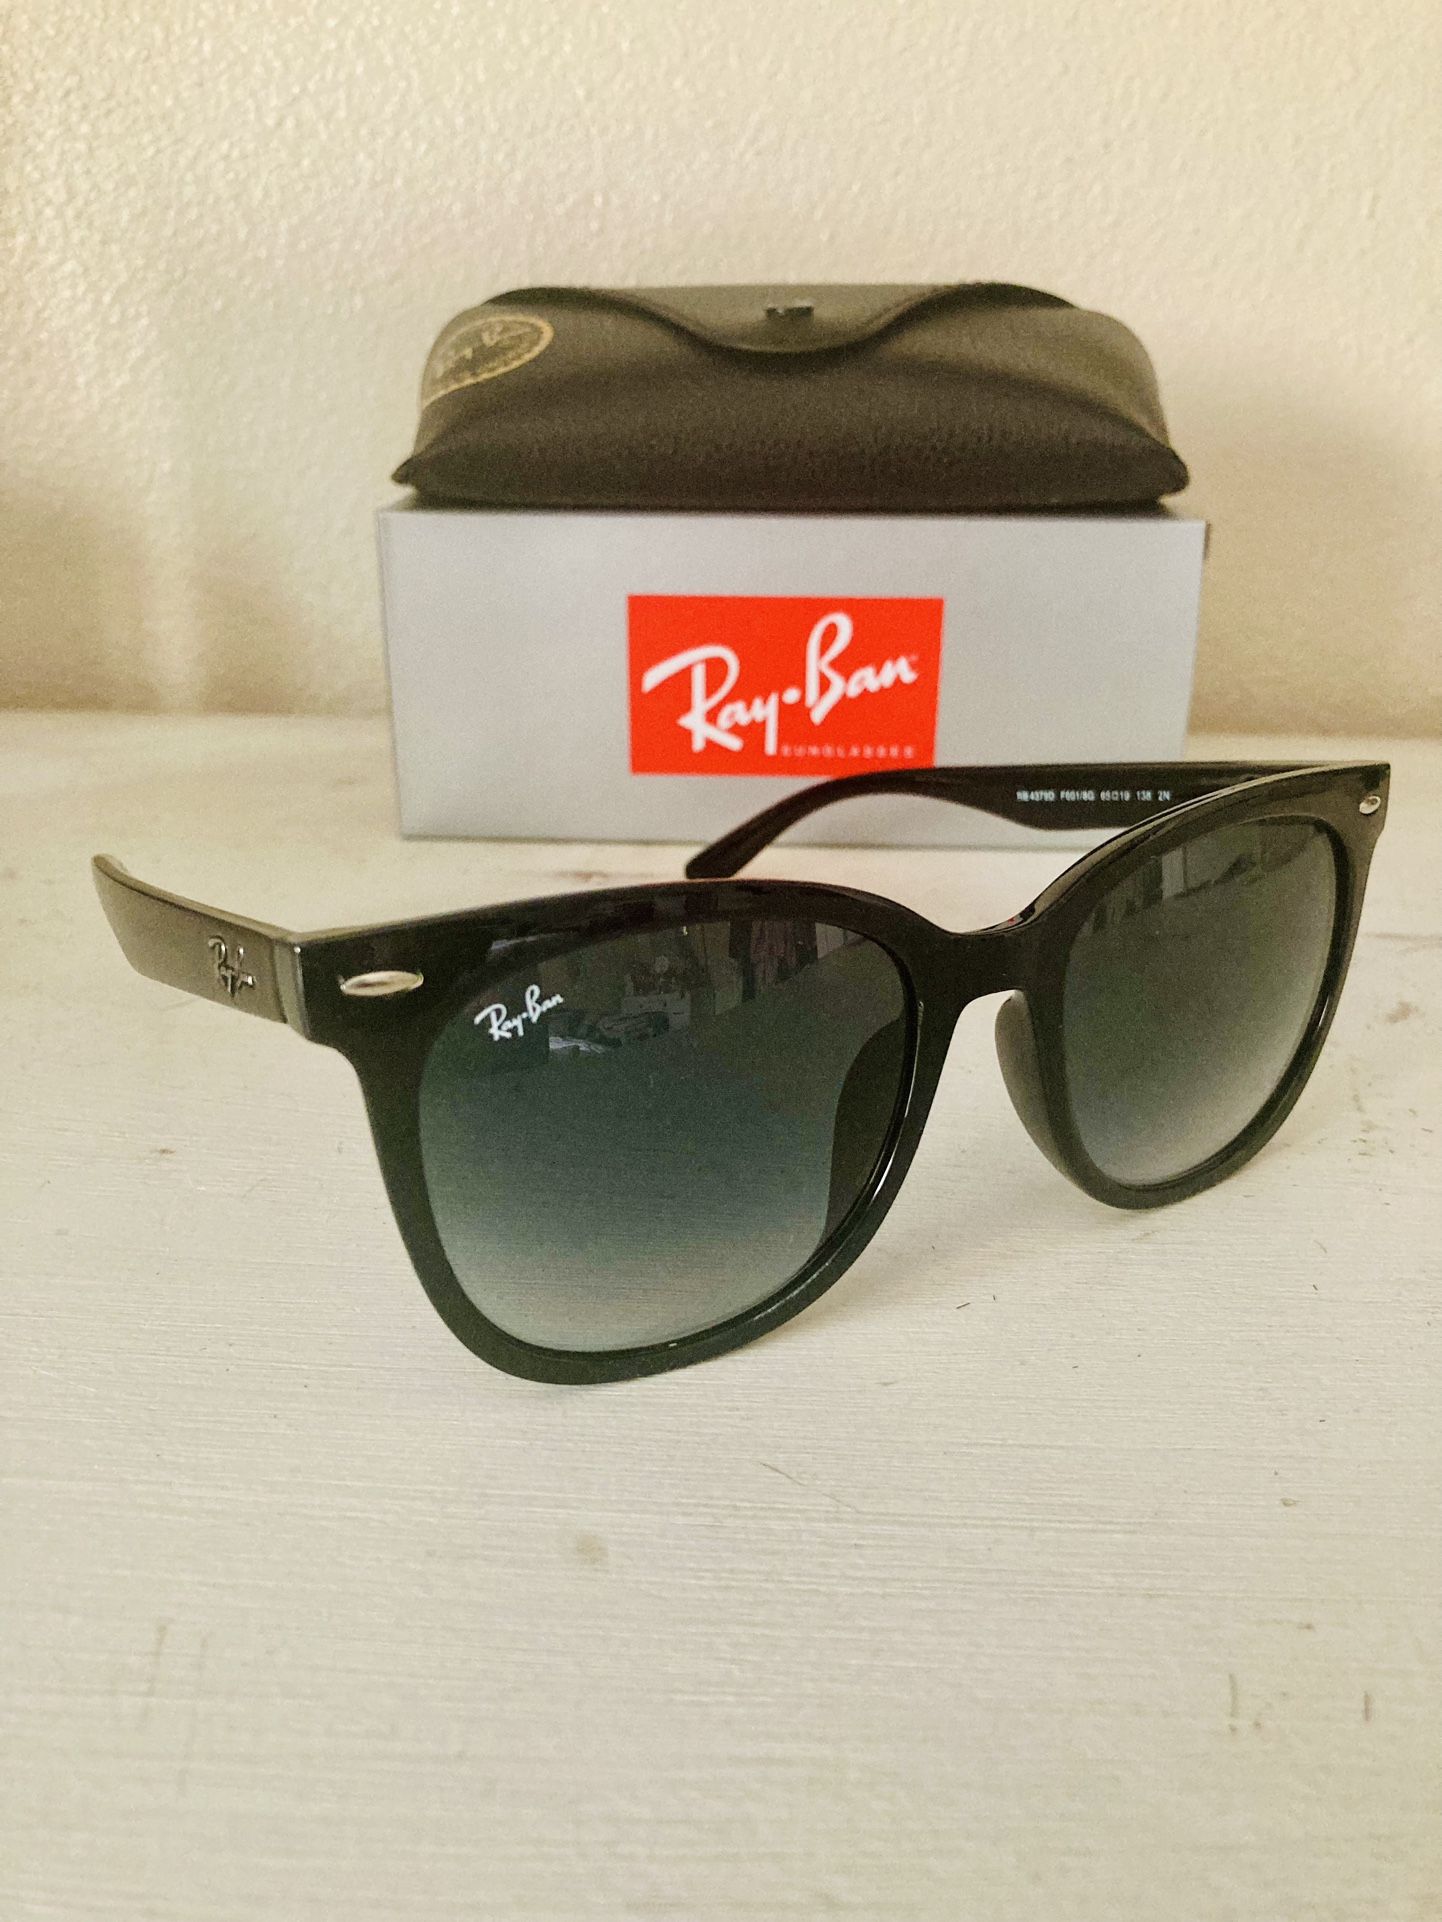 New Ray Ban Sunglasses 😎 With Original Rayban Packaging 